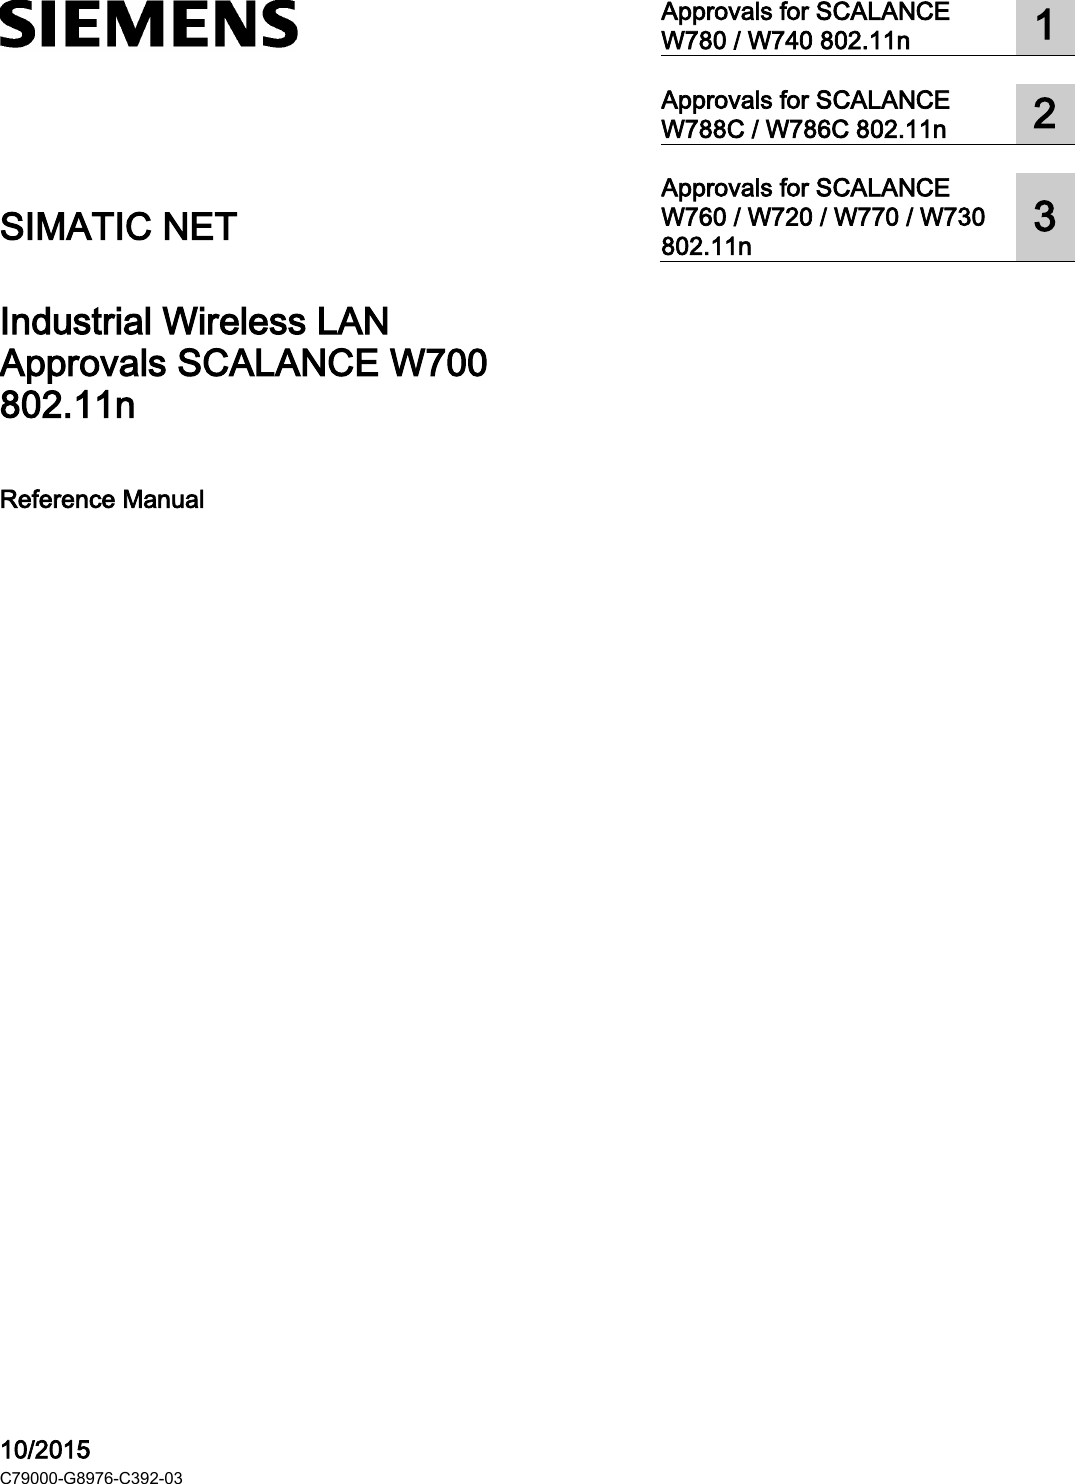   Approvals SCALANCE W700 802.11n  ___________________ ___________________ ___________  SIMATIC NET Industrial Wireless LAN Approvals SCALANCE W700 802.11n Reference Manual    10/2015 C79000-G8976-C392-03 Approvals for SCALANCE W780 / W740 802.11n  1  Approvals for SCALANCE W788C / W786C 802.11n  2  Approvals for SCALANCE W760 / W720 / W770 / W730 802.11n  3 